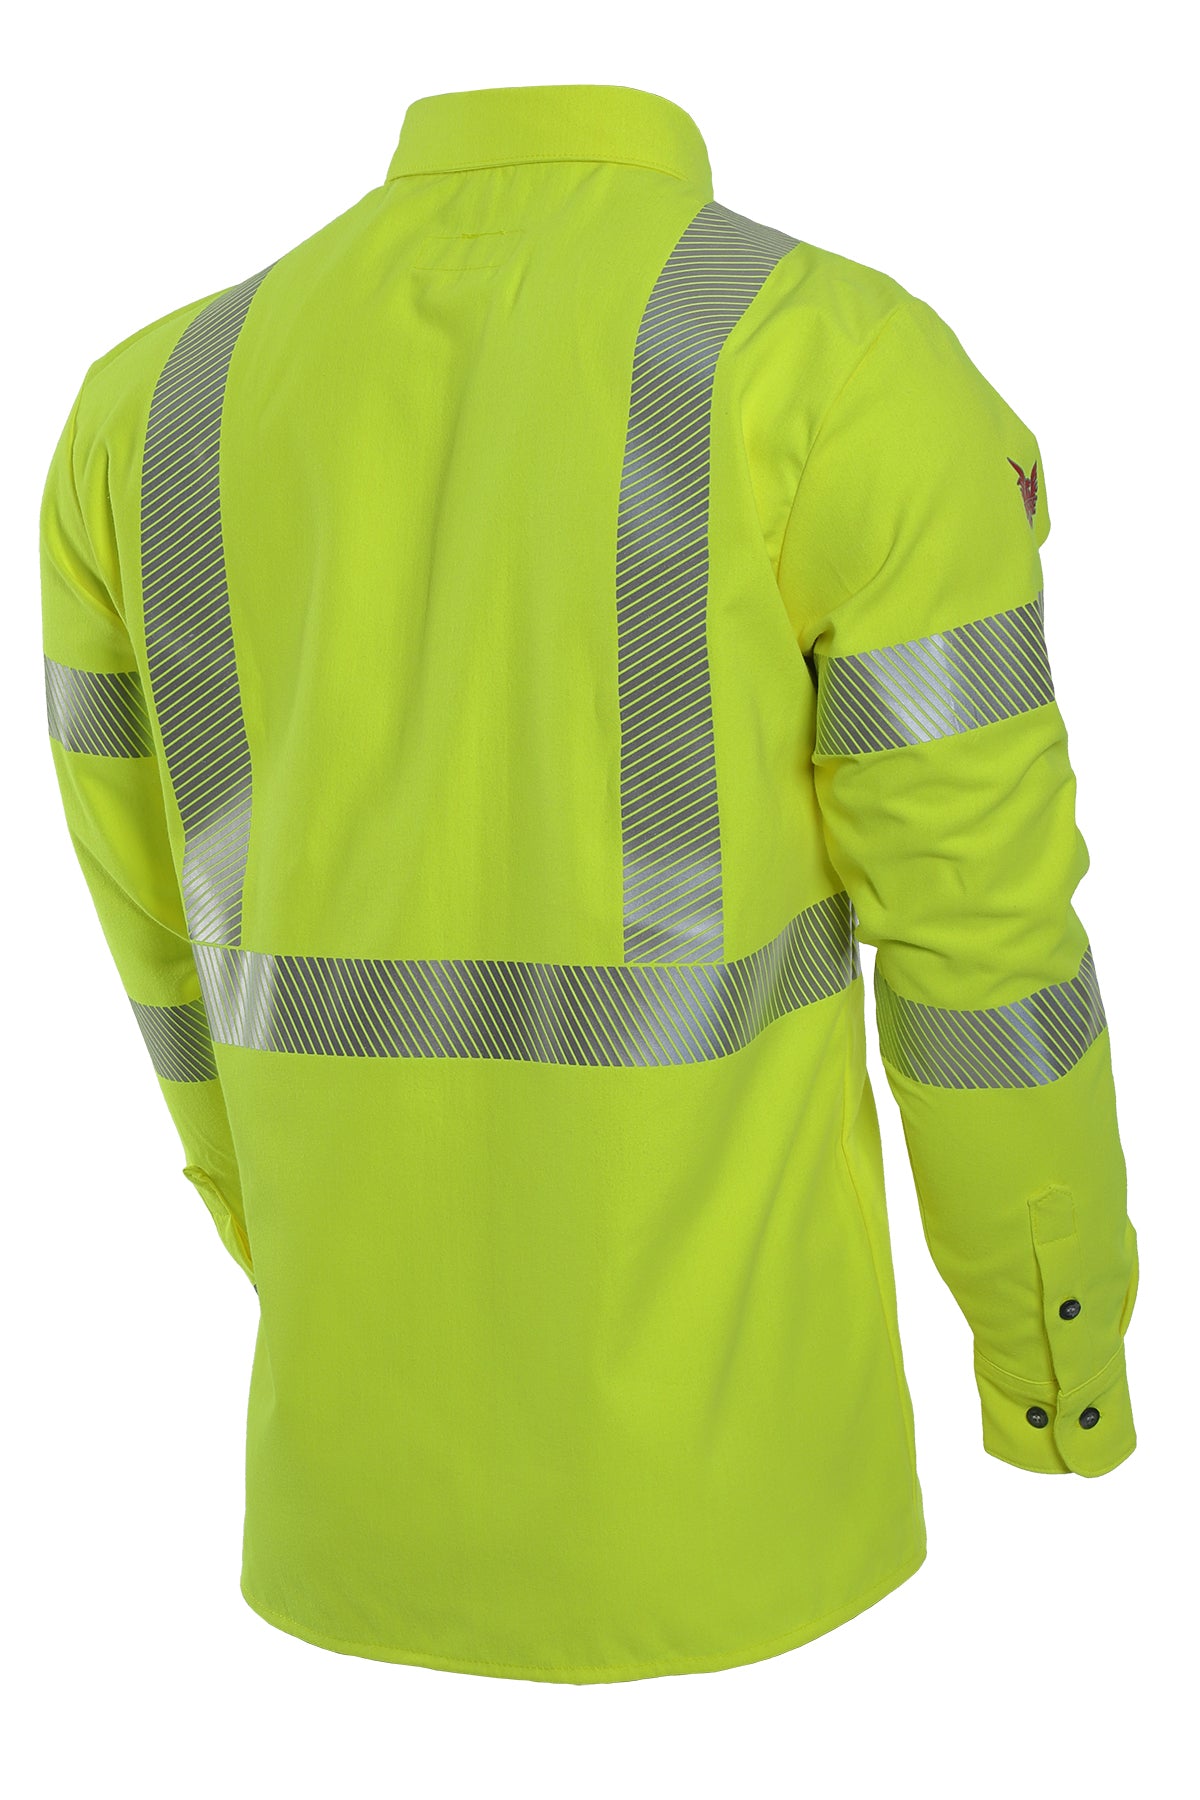 National Safety Apparel Drifire FR Hi-Vis Utility Shirt, Type R Class 3, 12 cal/cm²